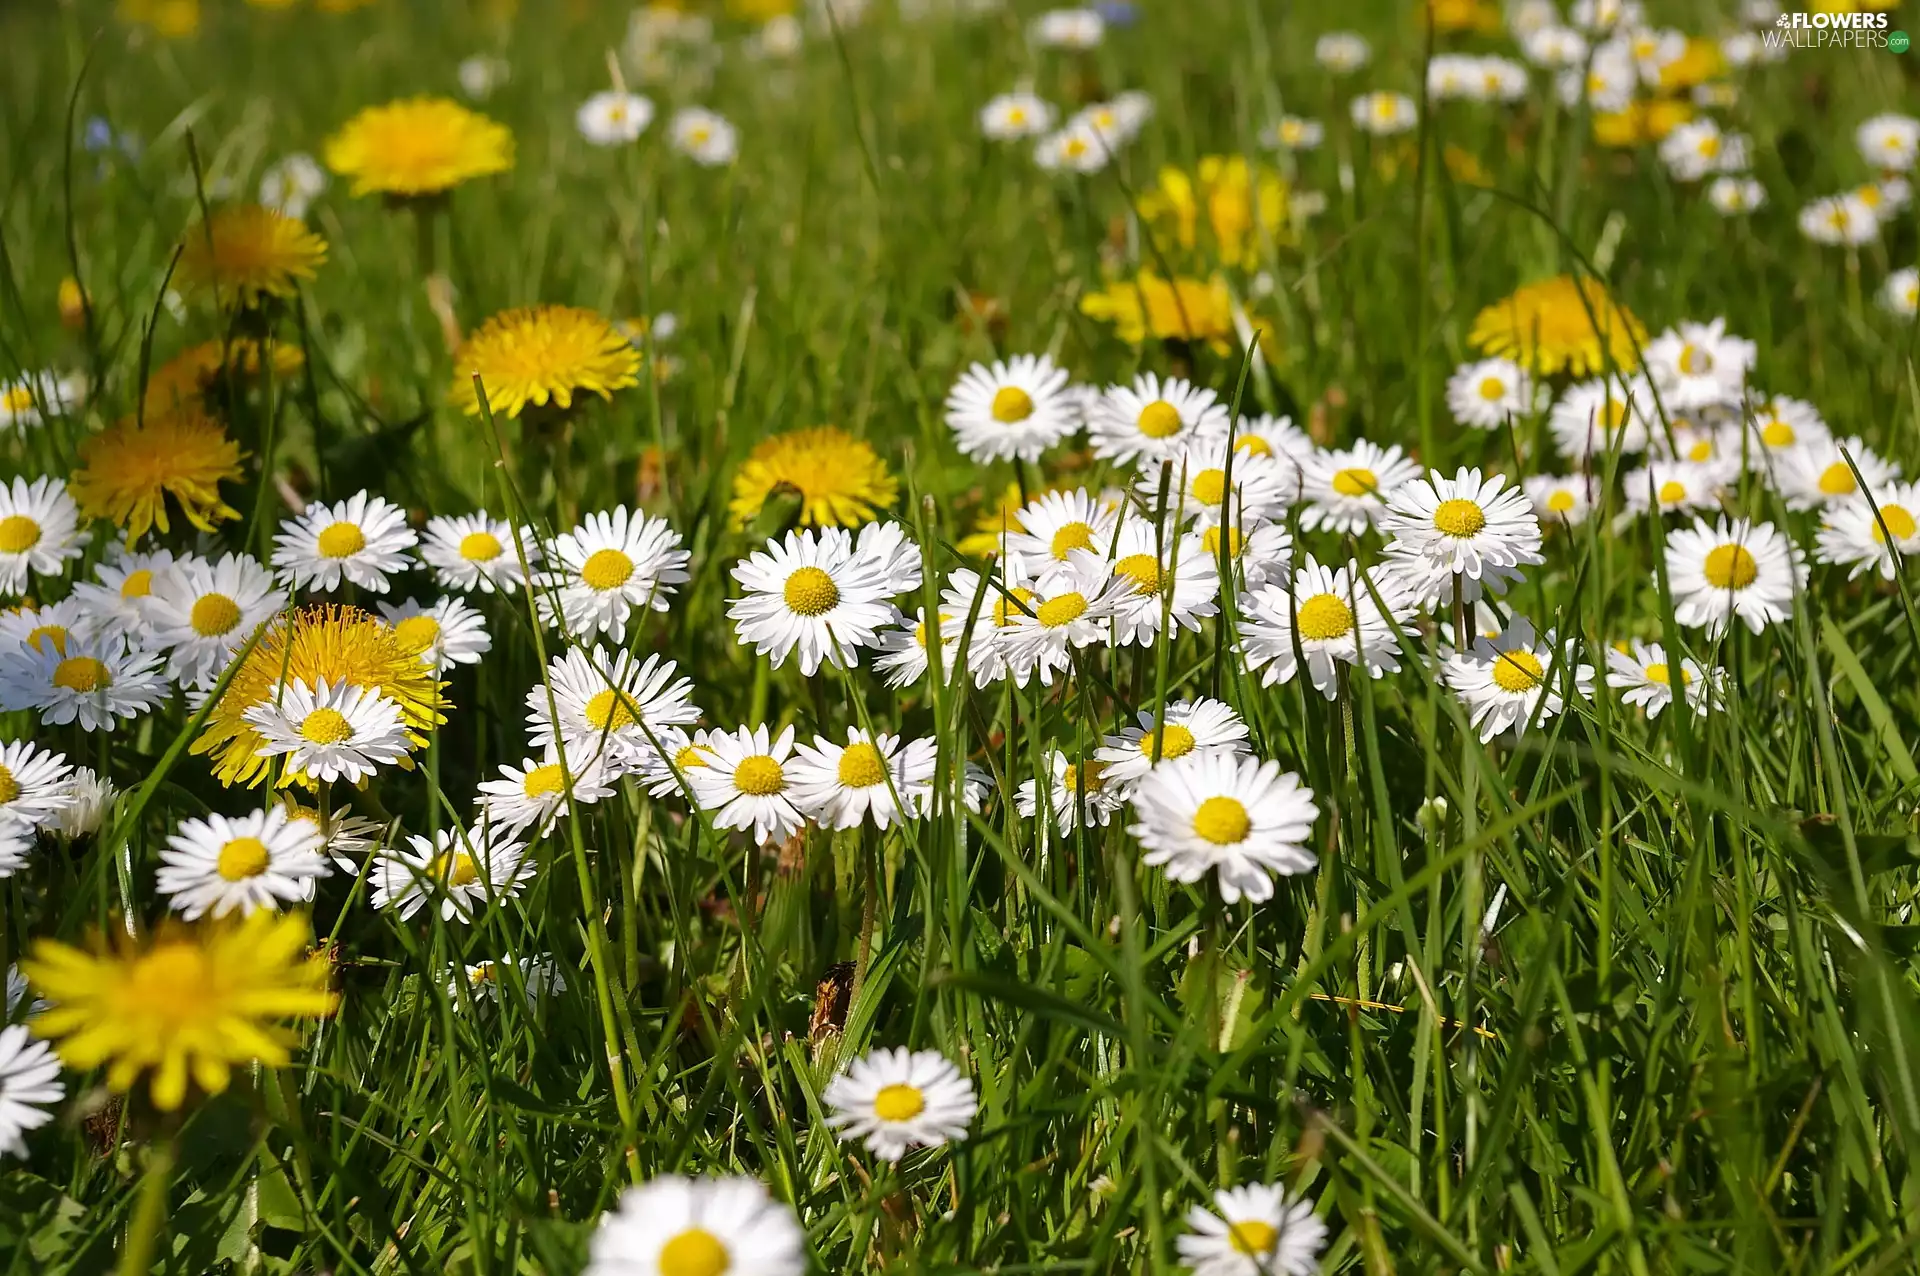 nuns, grass, Flowers, daisies, Spring